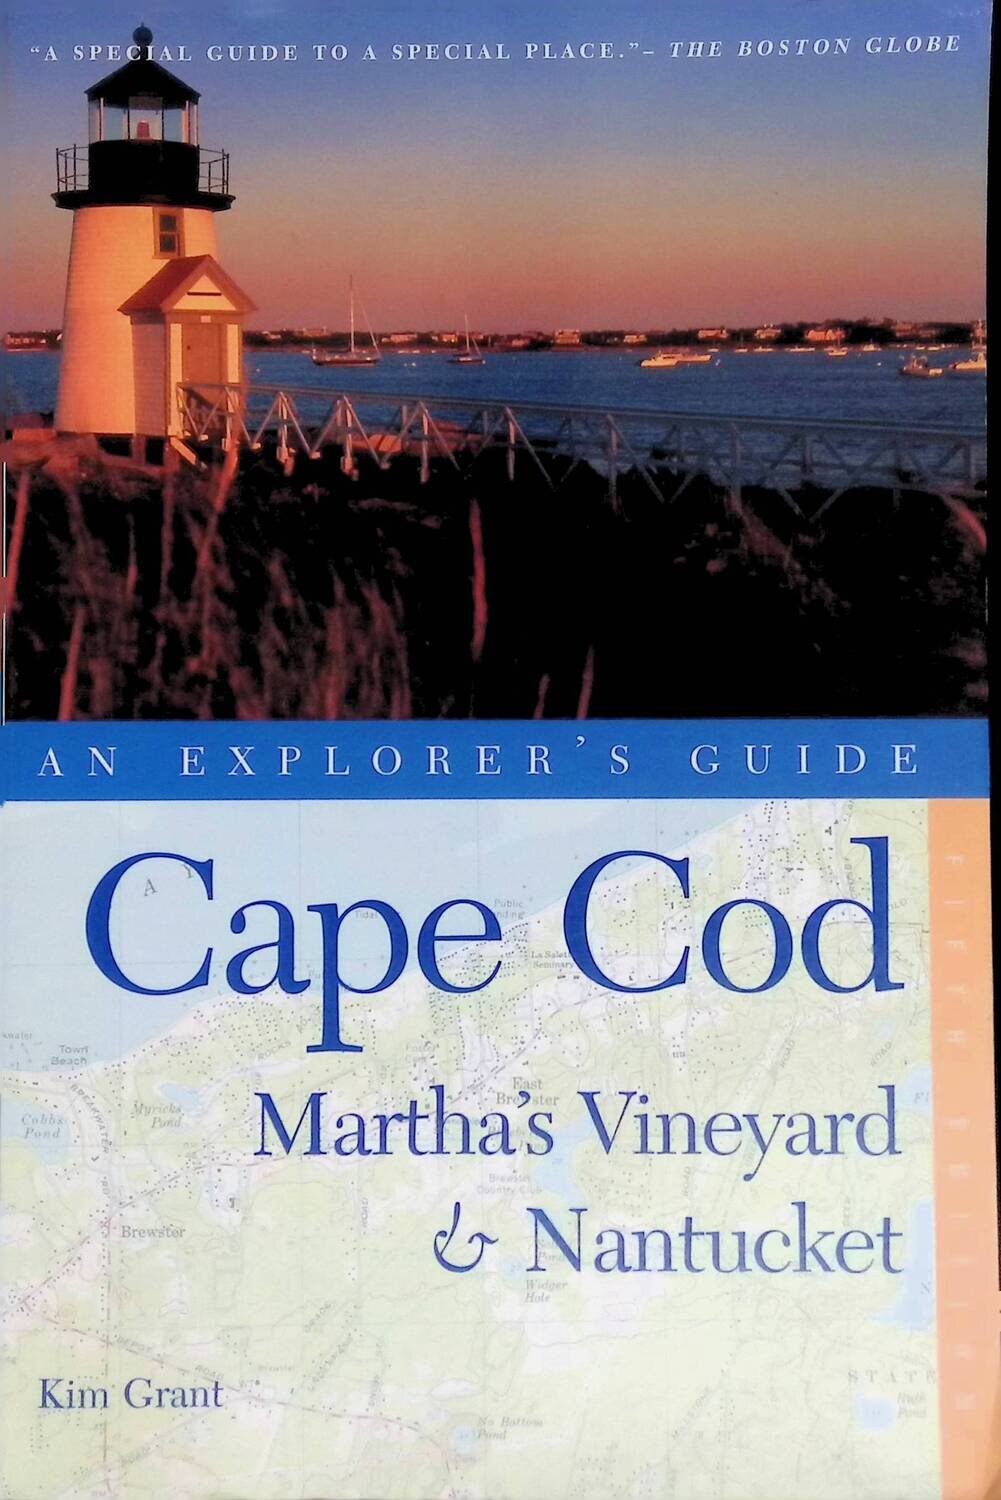 Cape Cod, Martha's Vineyard & Nantucket – An Explorerэs Guide 5e; Kim Grant